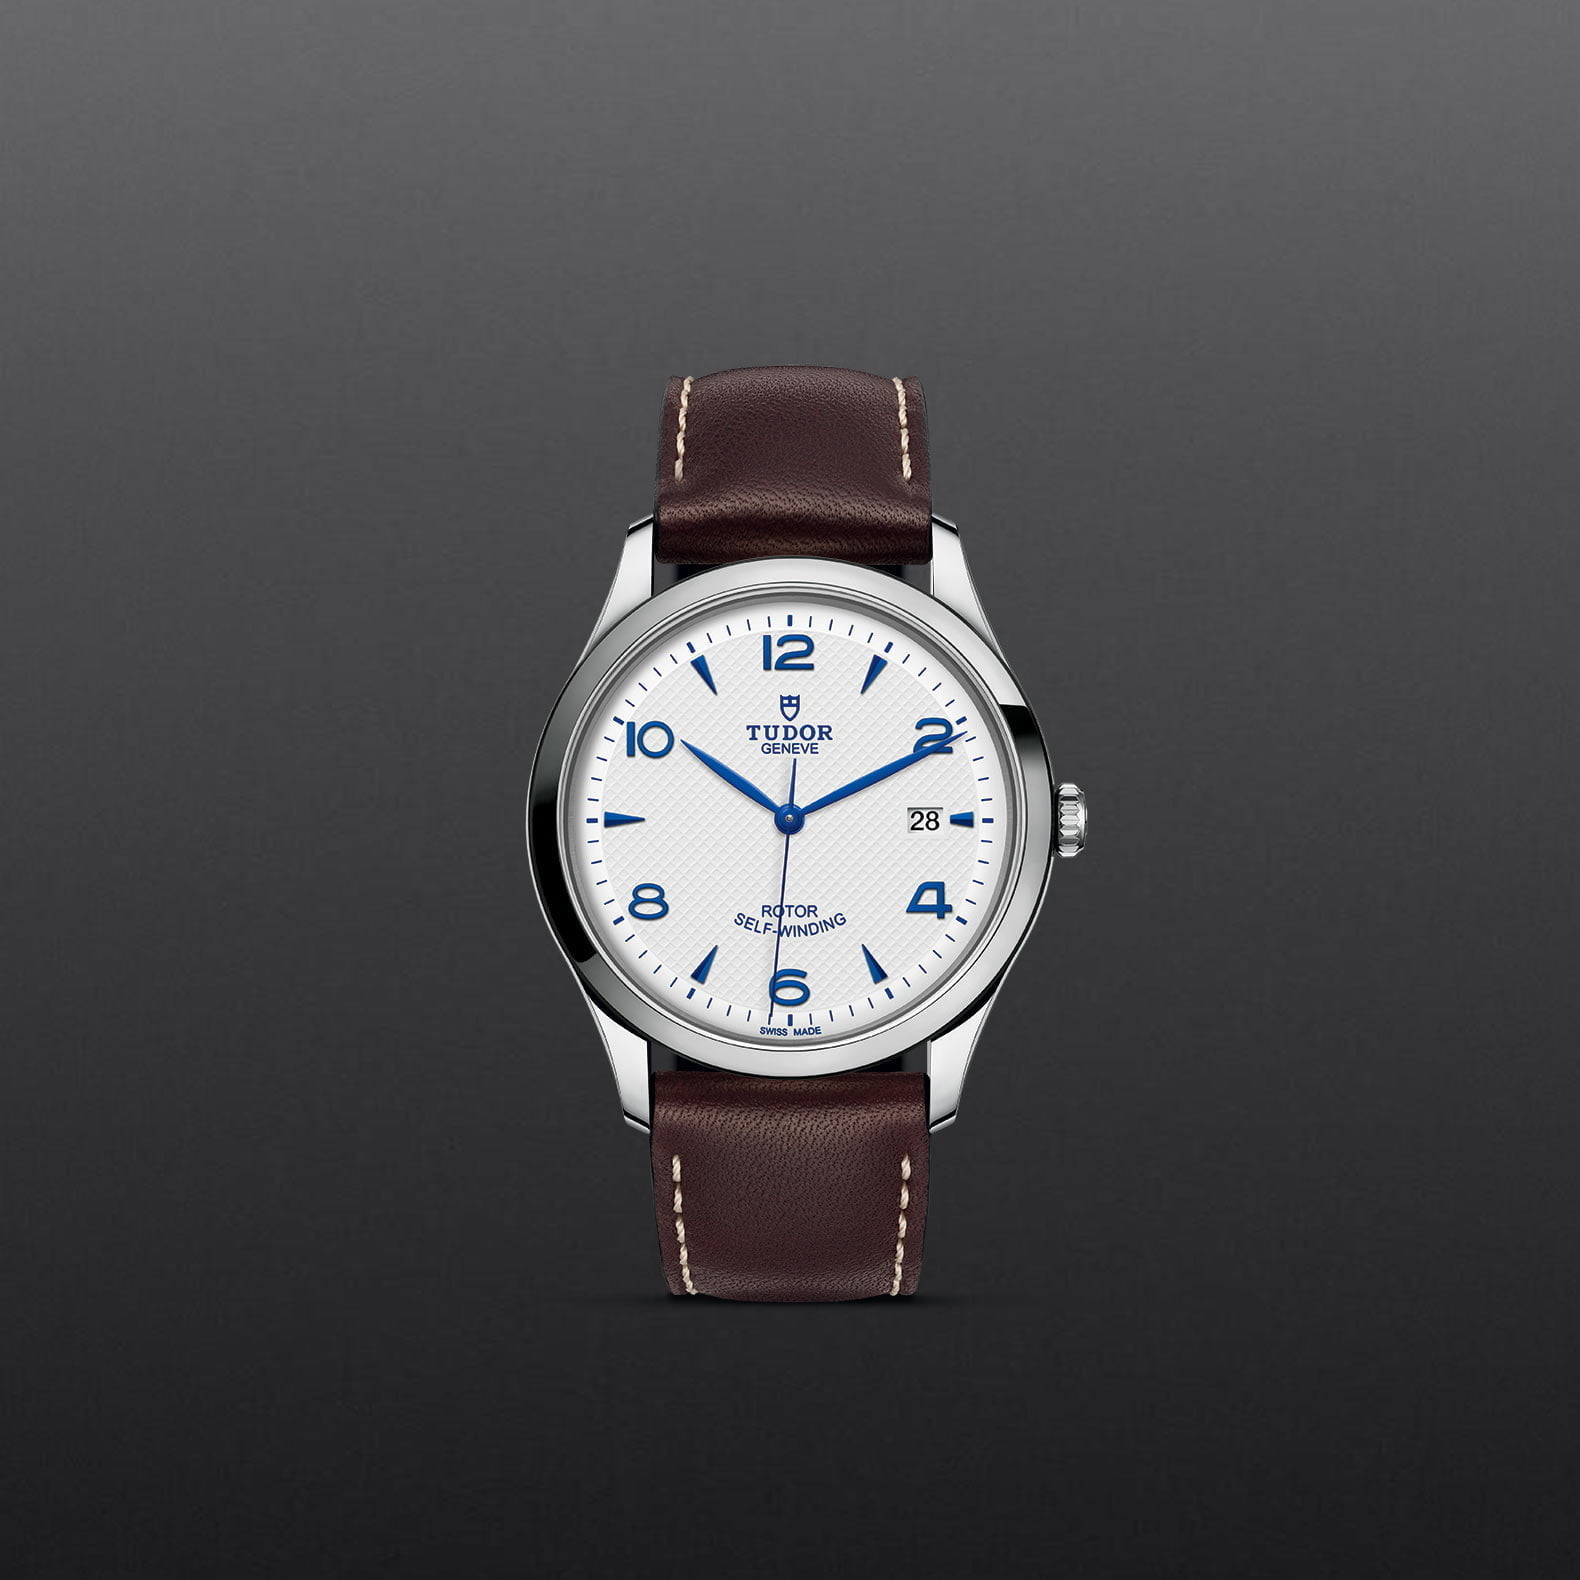 M91650 0010 Tudor Watch Carousel 1 4 10 2023 1